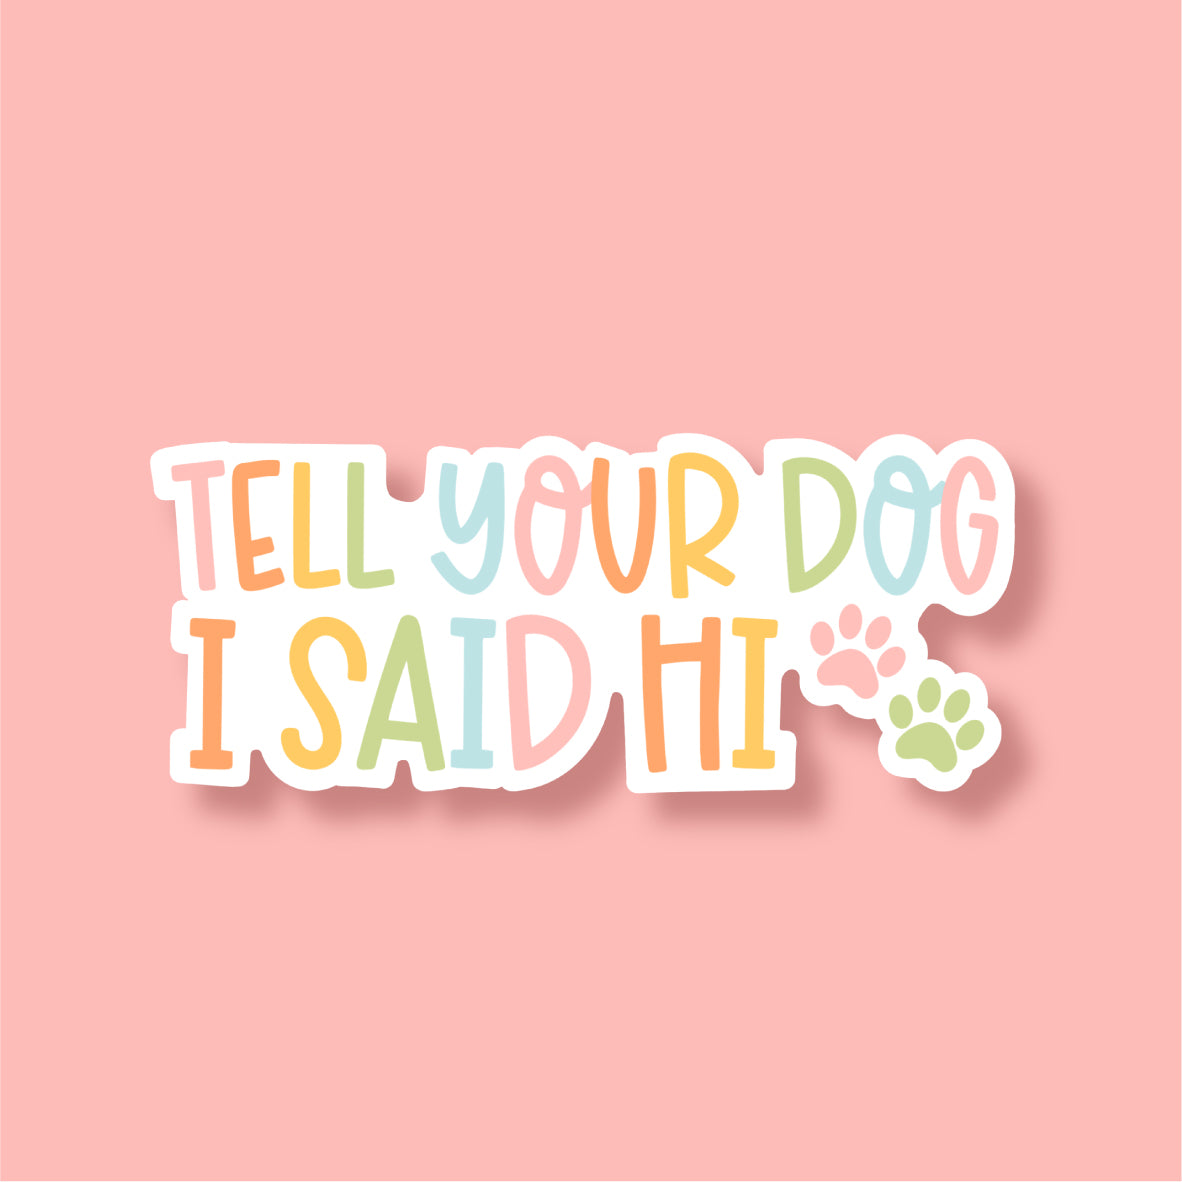 Tell Your Dog I Said Hi Vinyl Die Cut Sticker